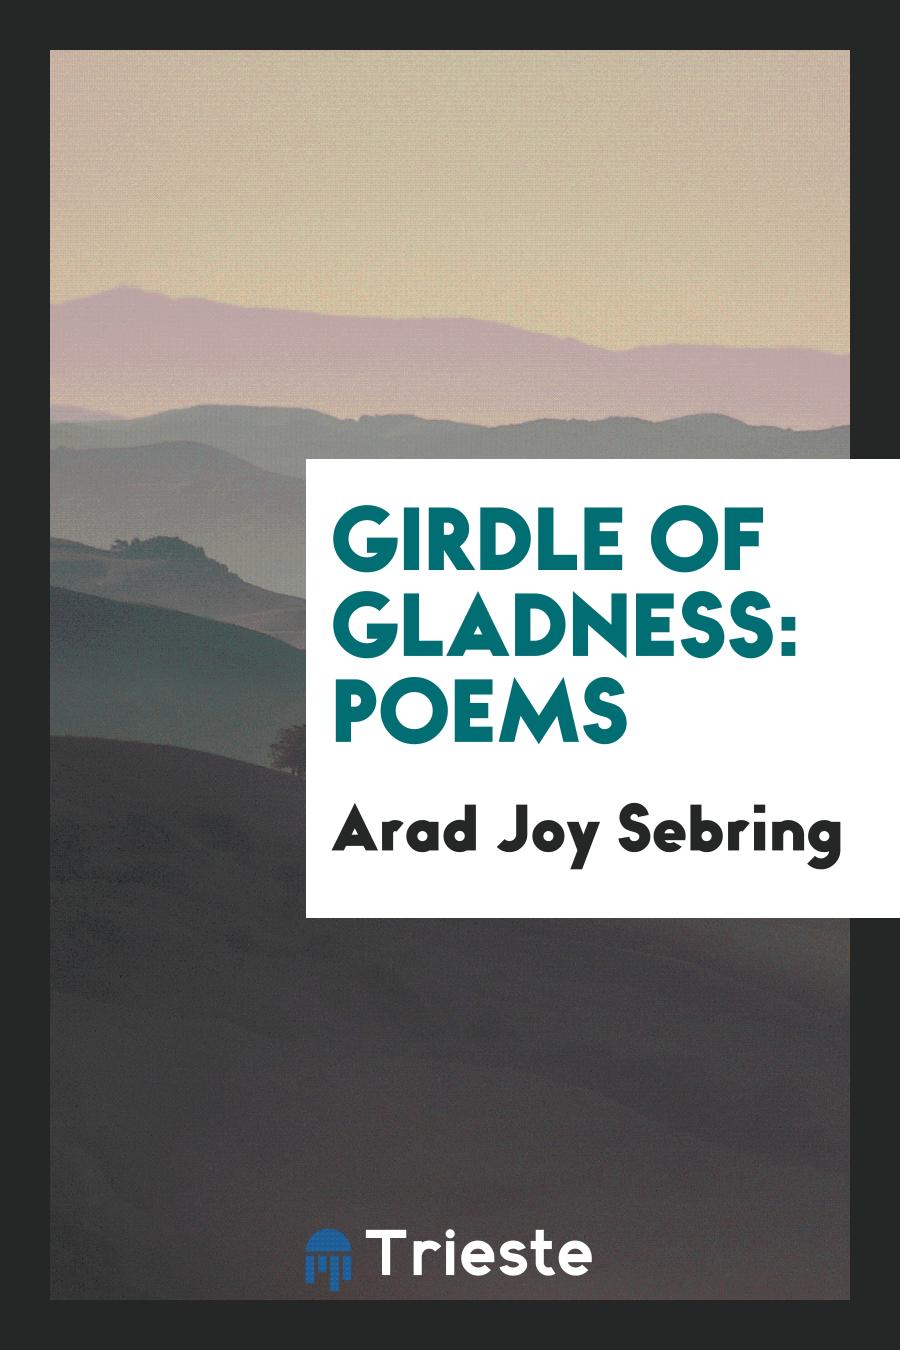 Girdle of gladness: poems